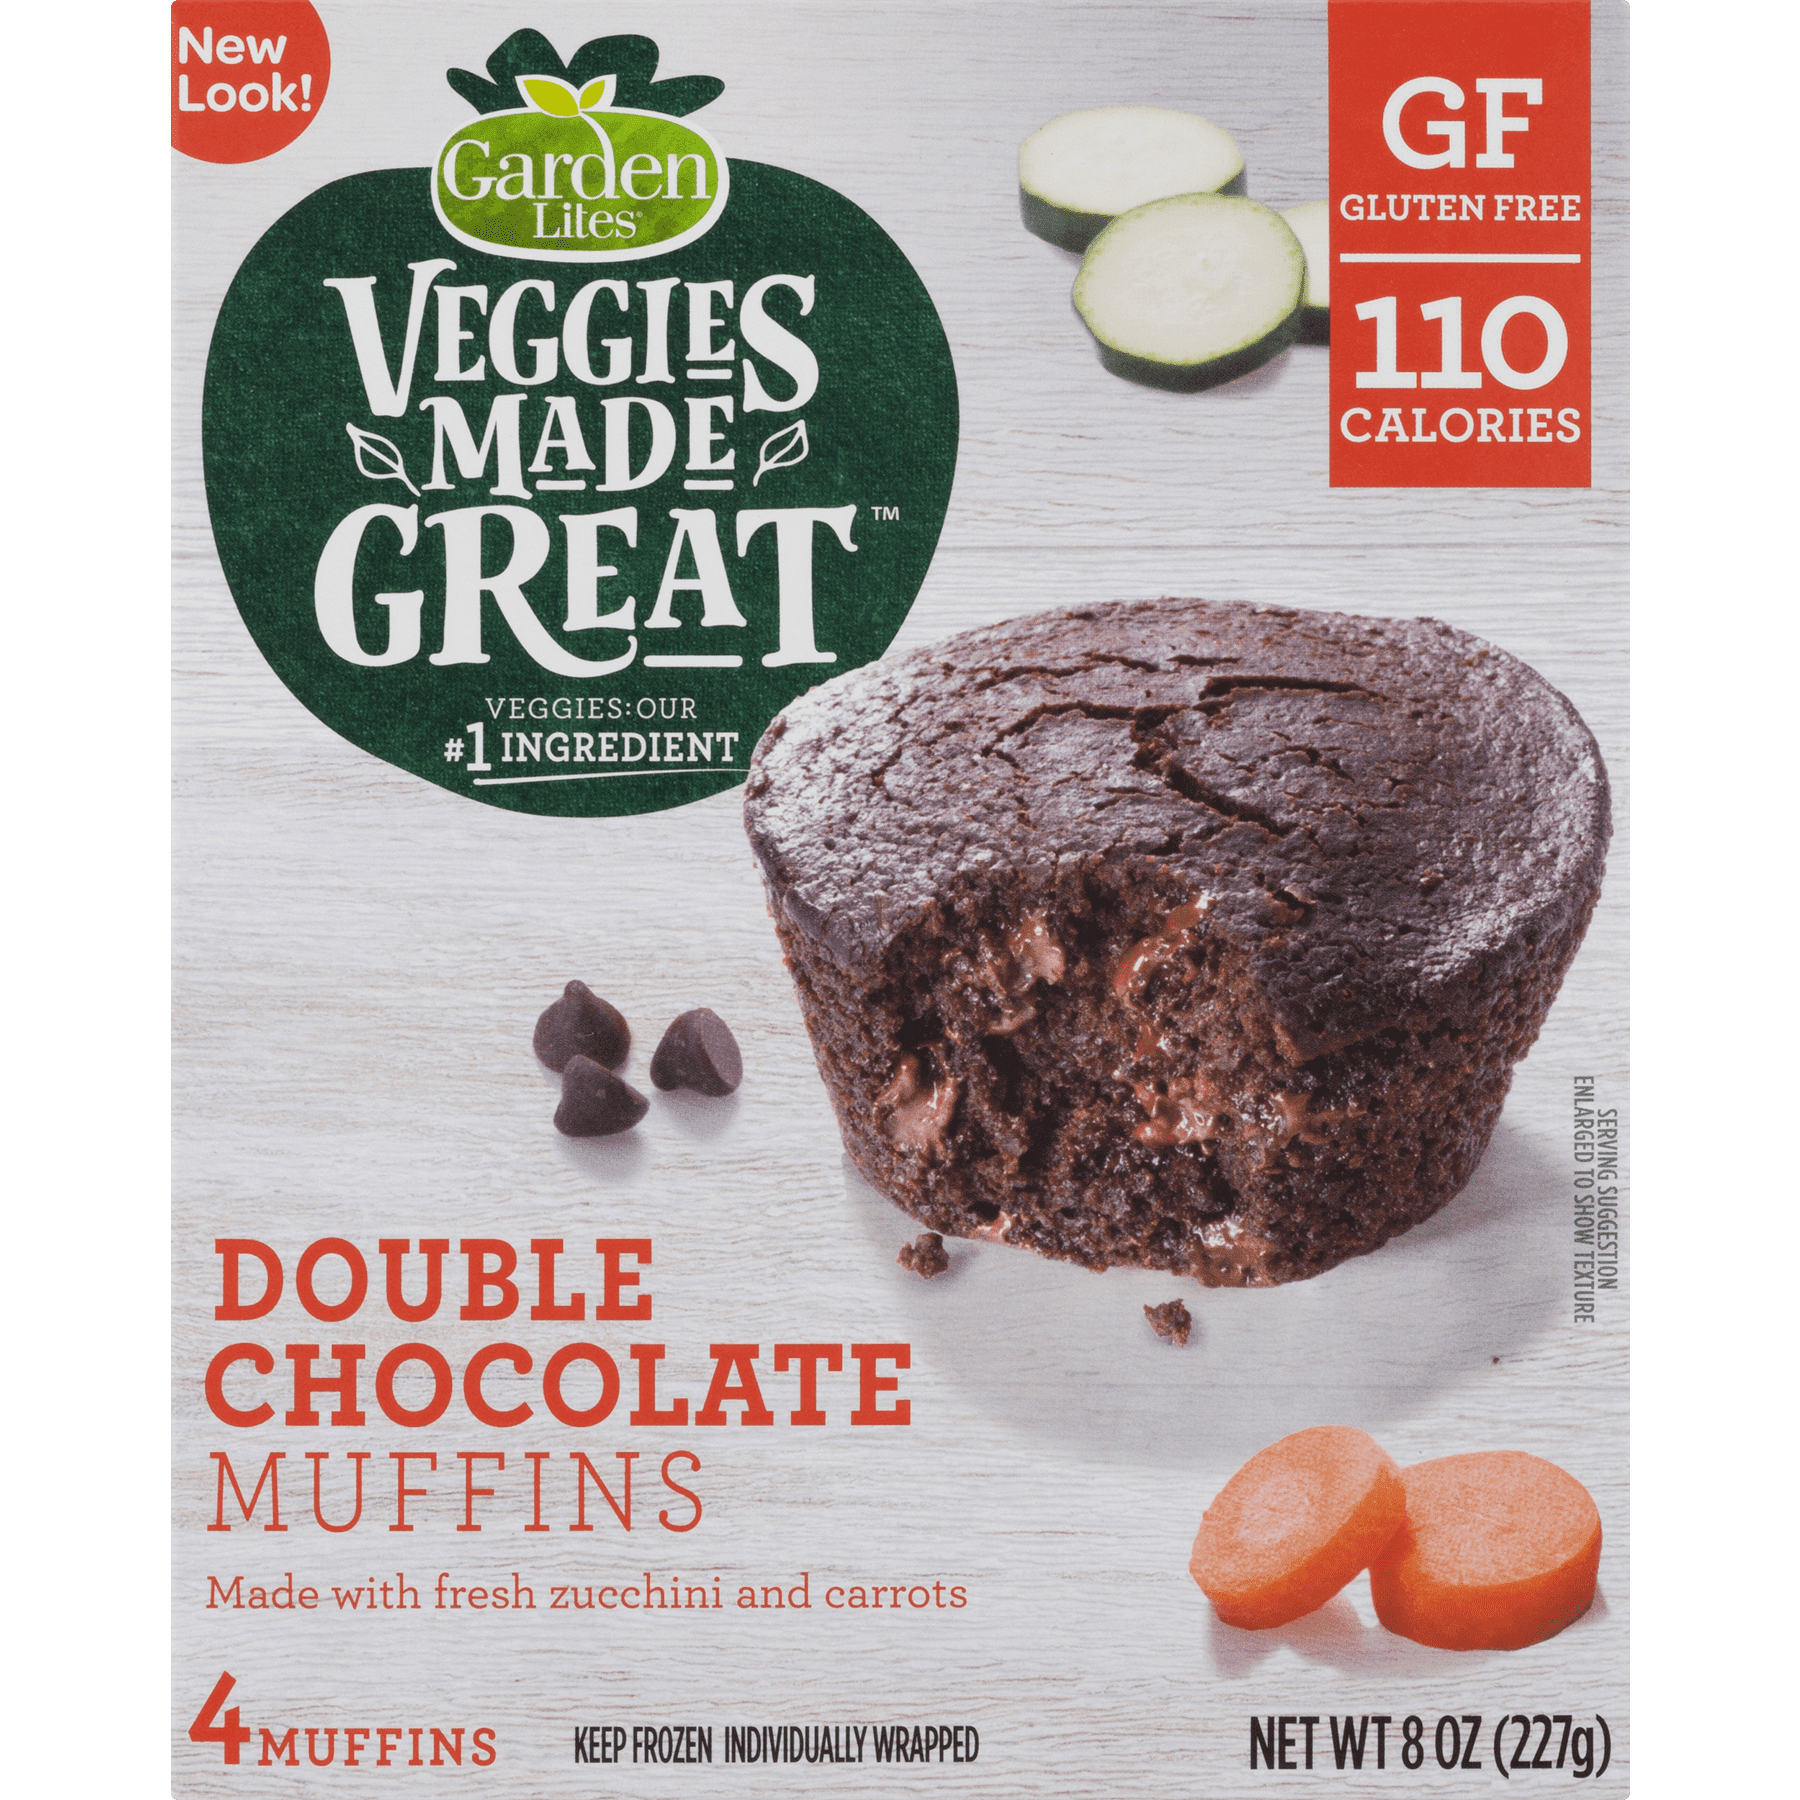 Garden Lites Veggies Made Great Muffins Double Chocolate Walmart